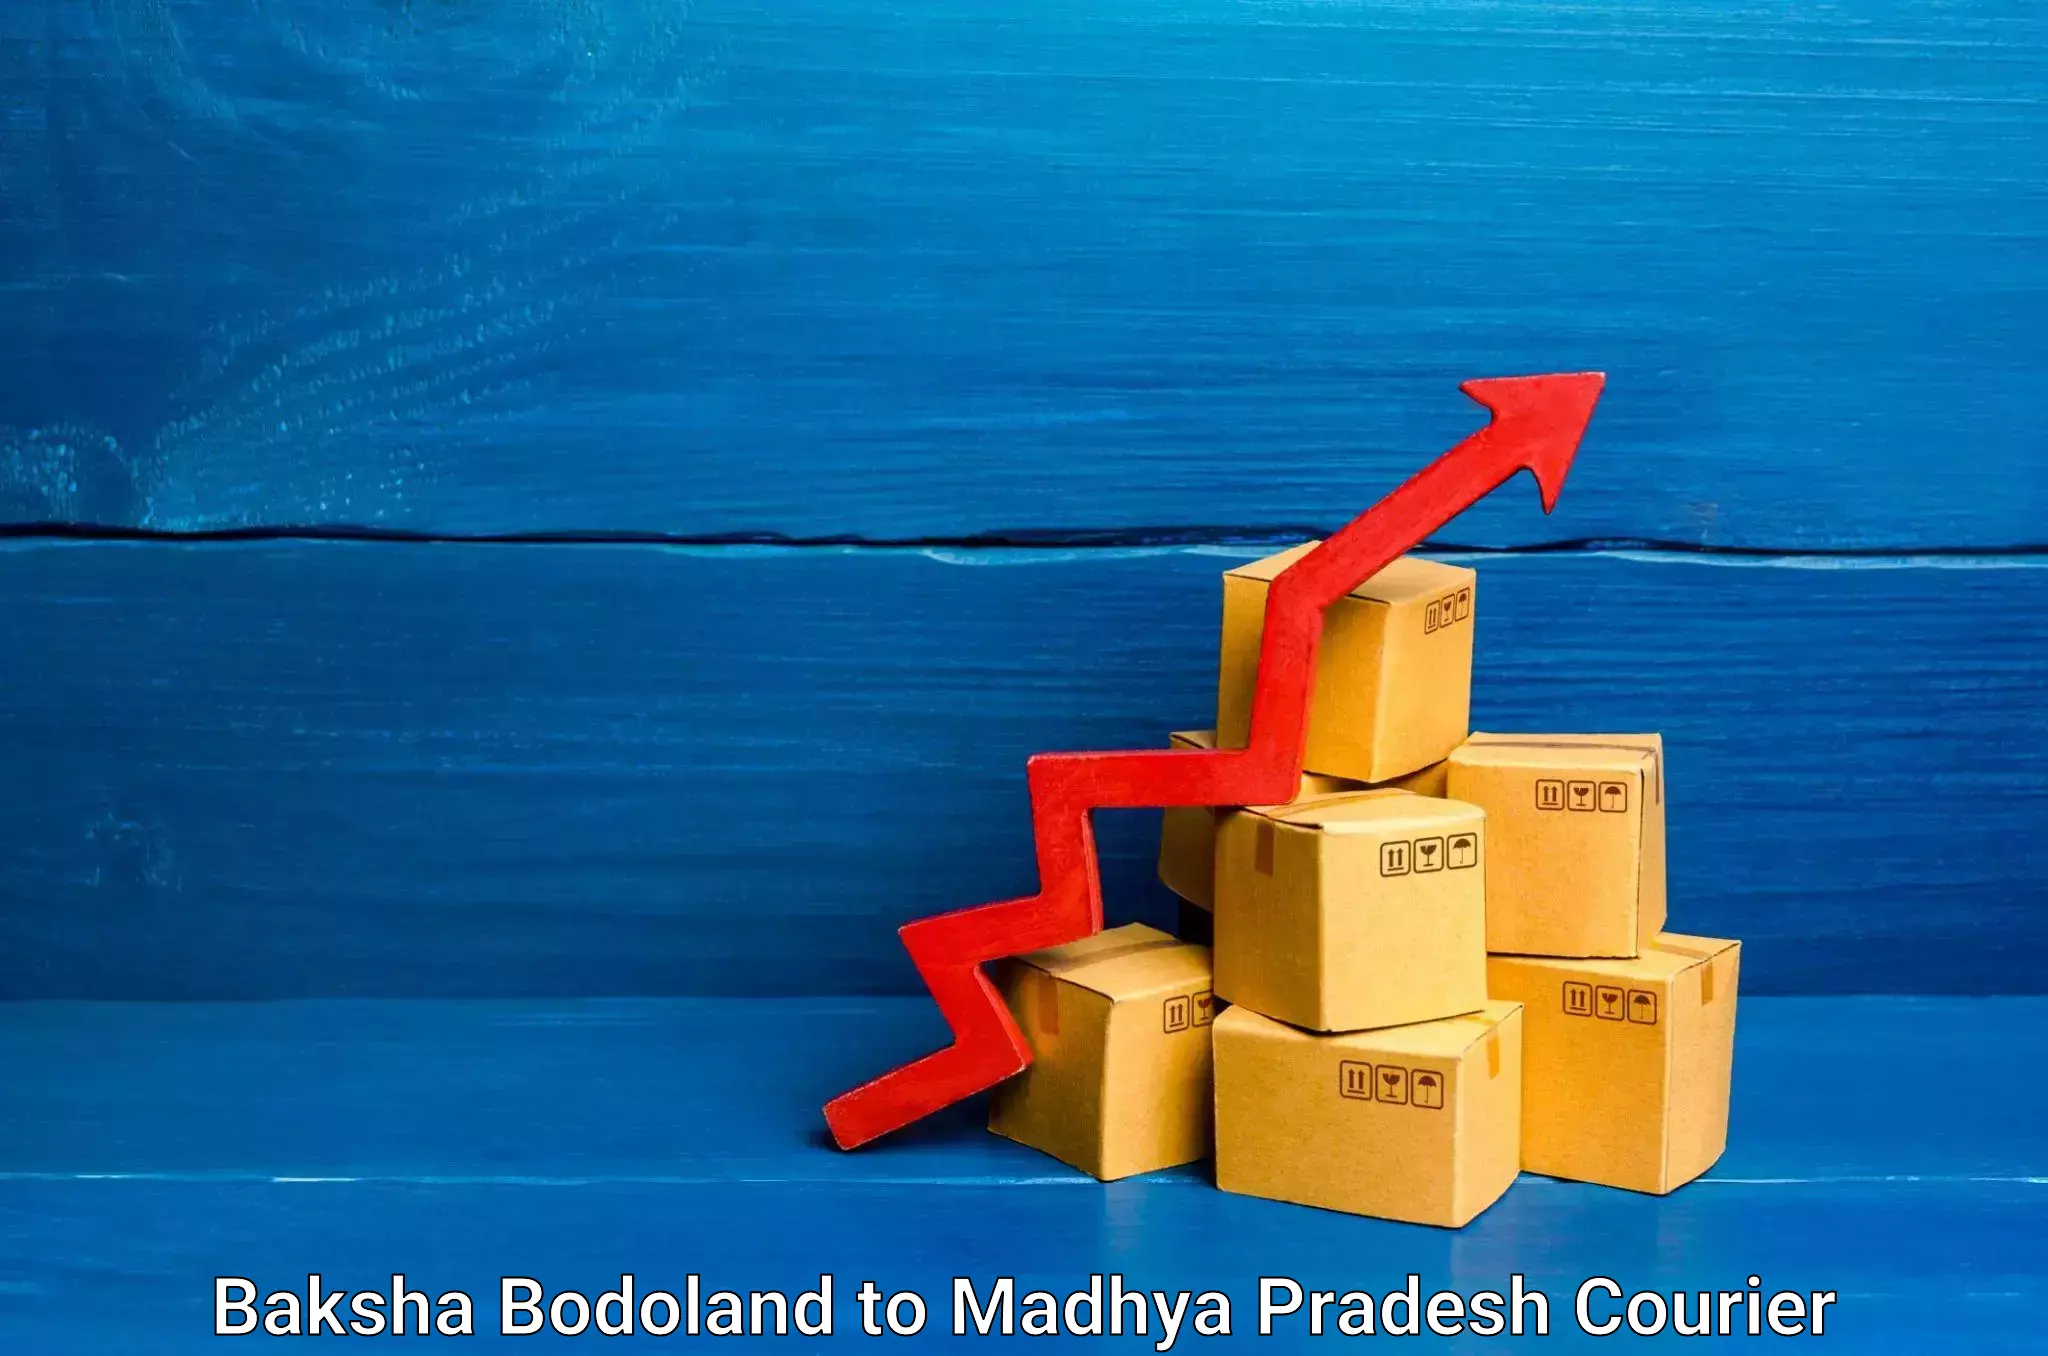 Reliable courier service Baksha Bodoland to Lashkar